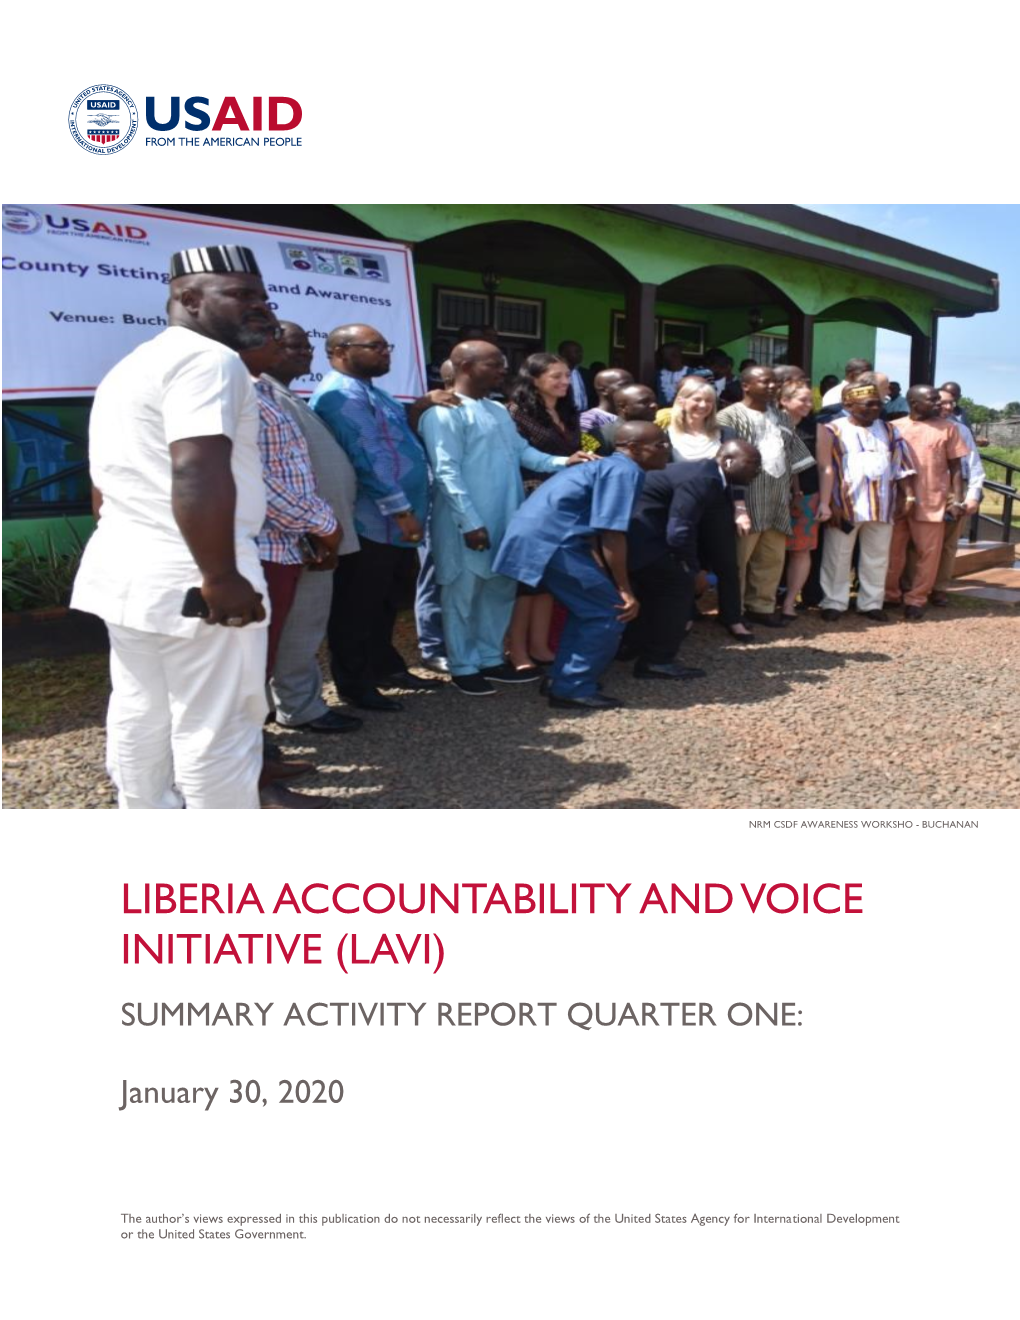 Liberia Accountability and Voice Initiative (Lavi) Summary Activity Report Quarter One